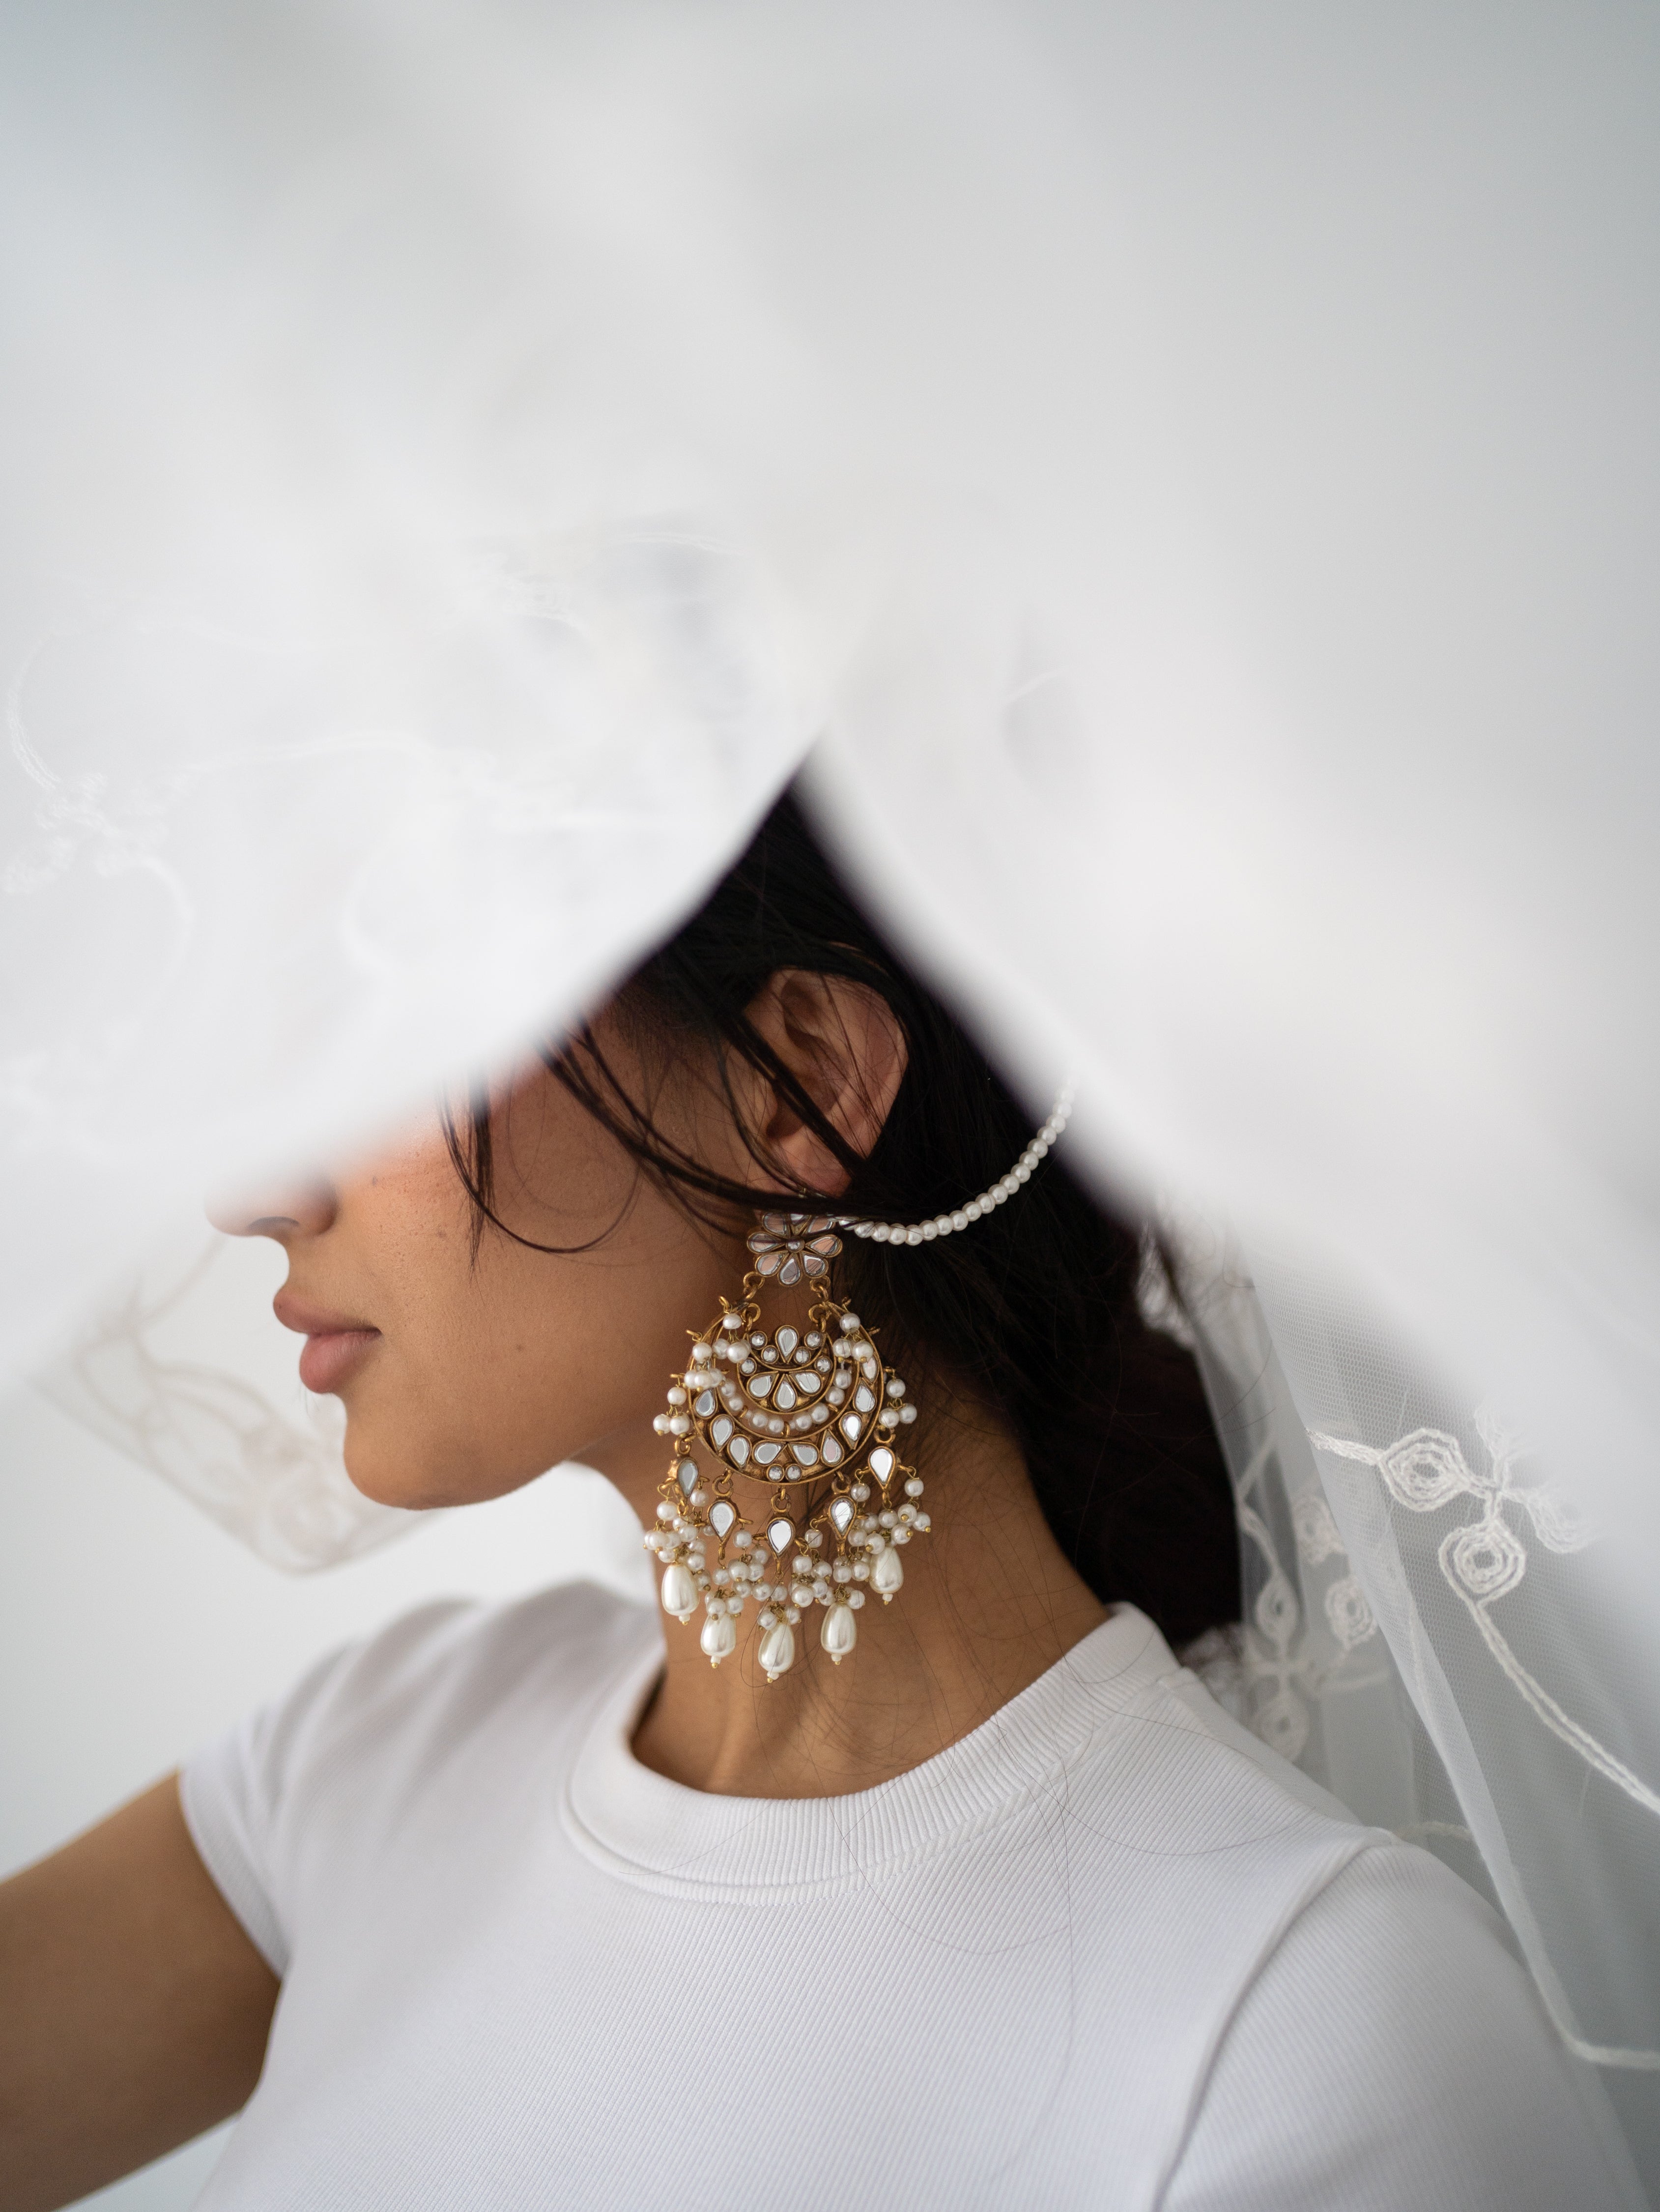 Malika Earrings